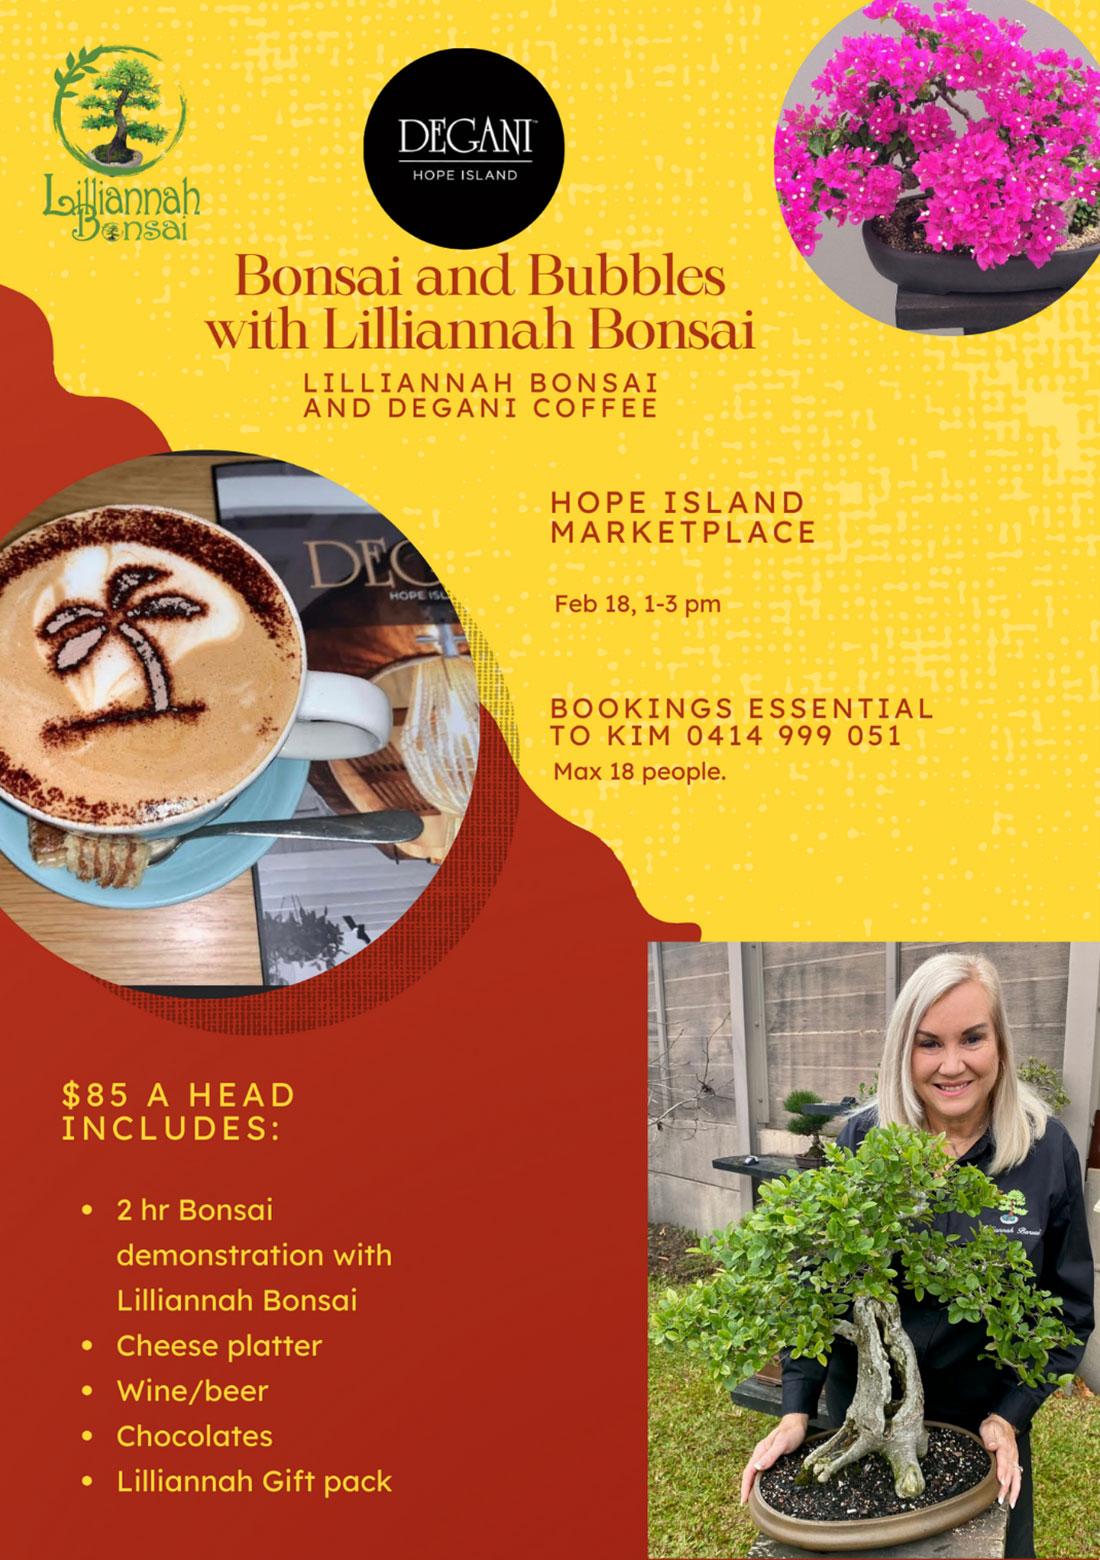 Bonsai and Bubbles